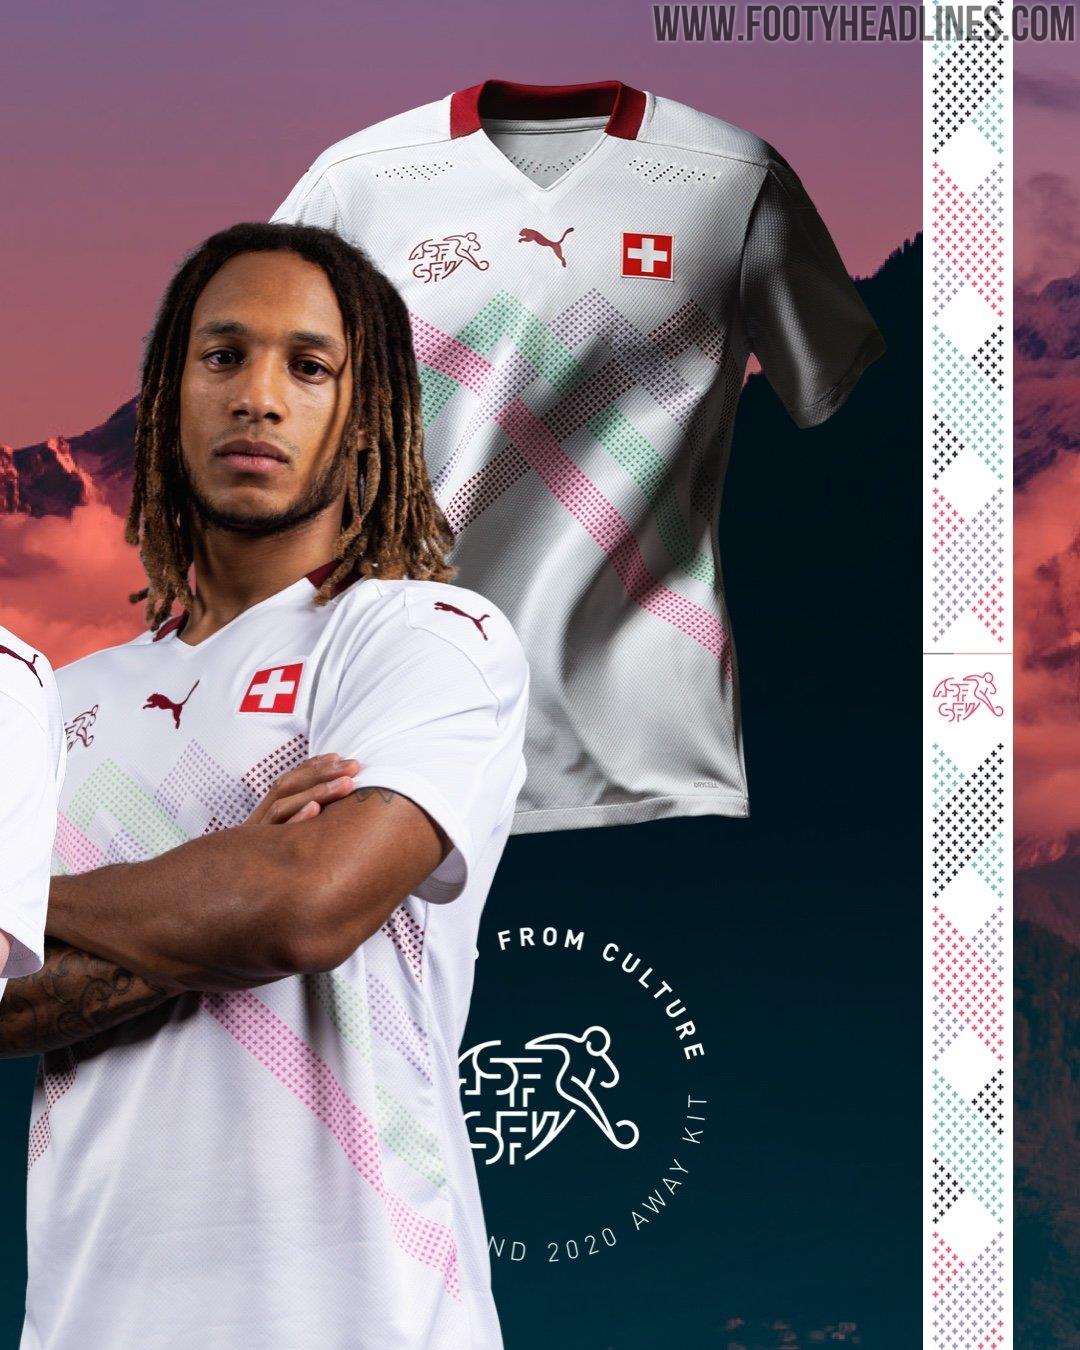 Swiss football culture's shirts